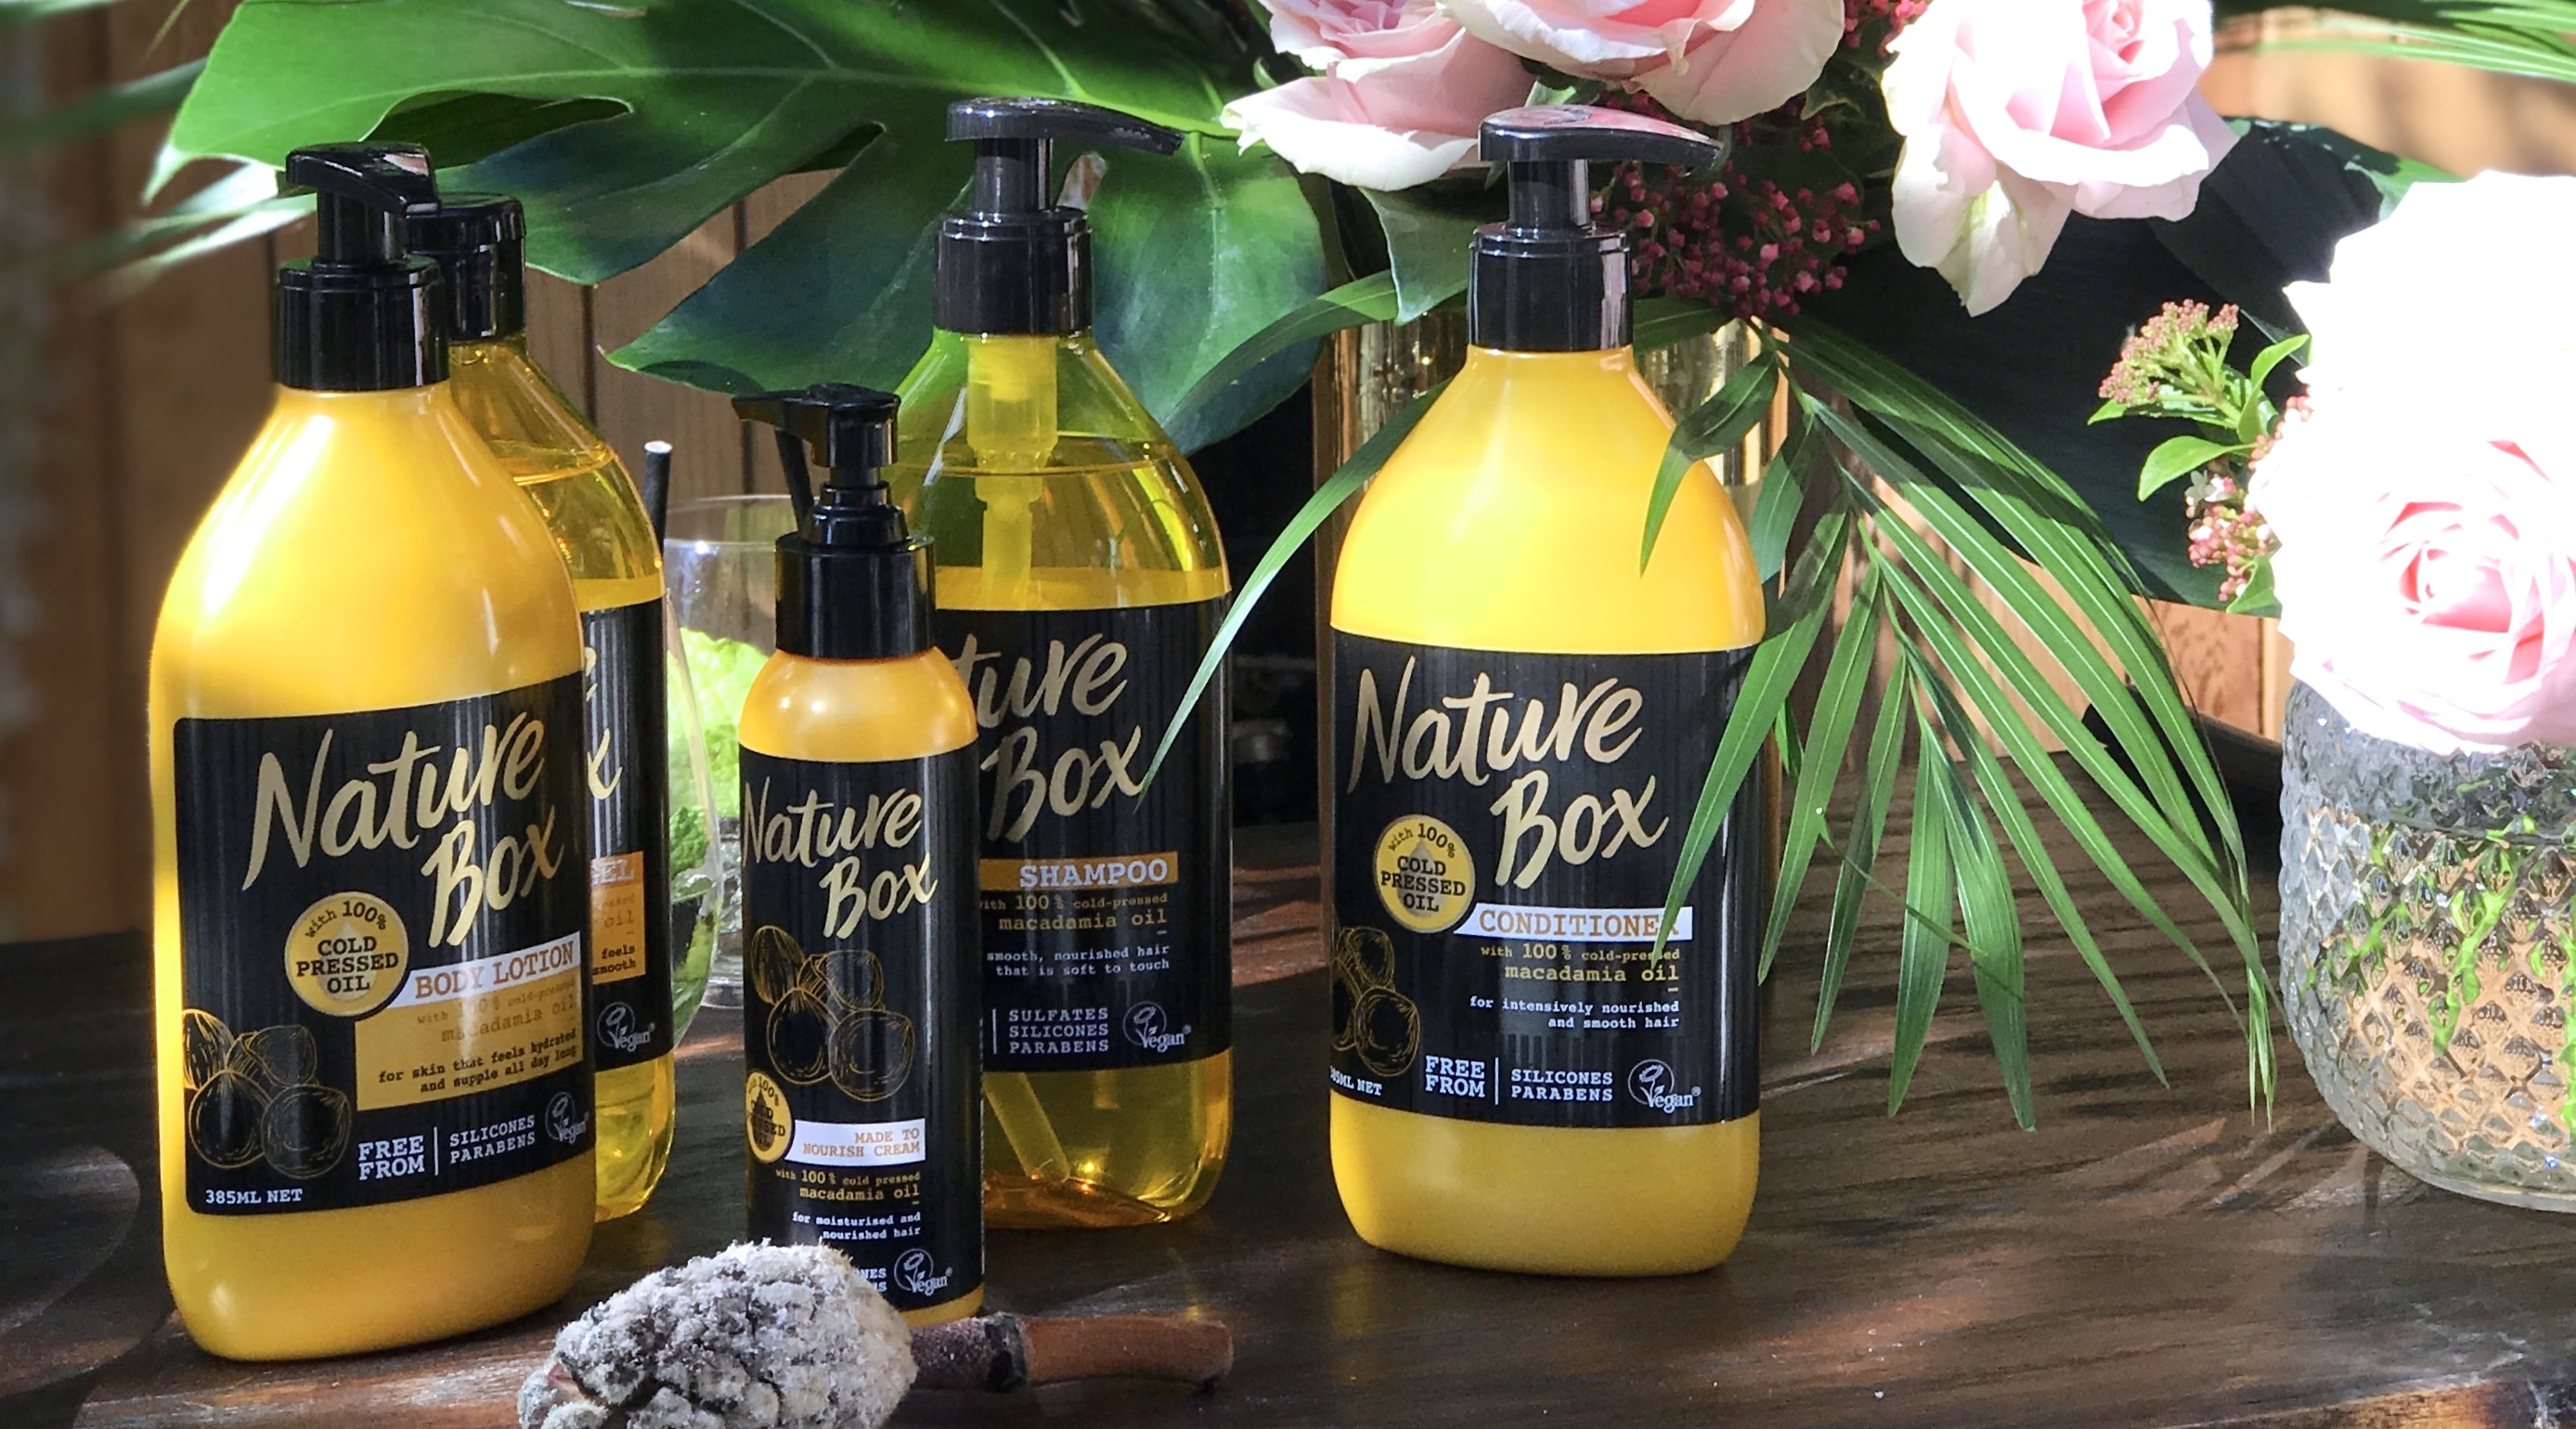 Vegan hair care range Nature Box launches into New Zealand supermarkets